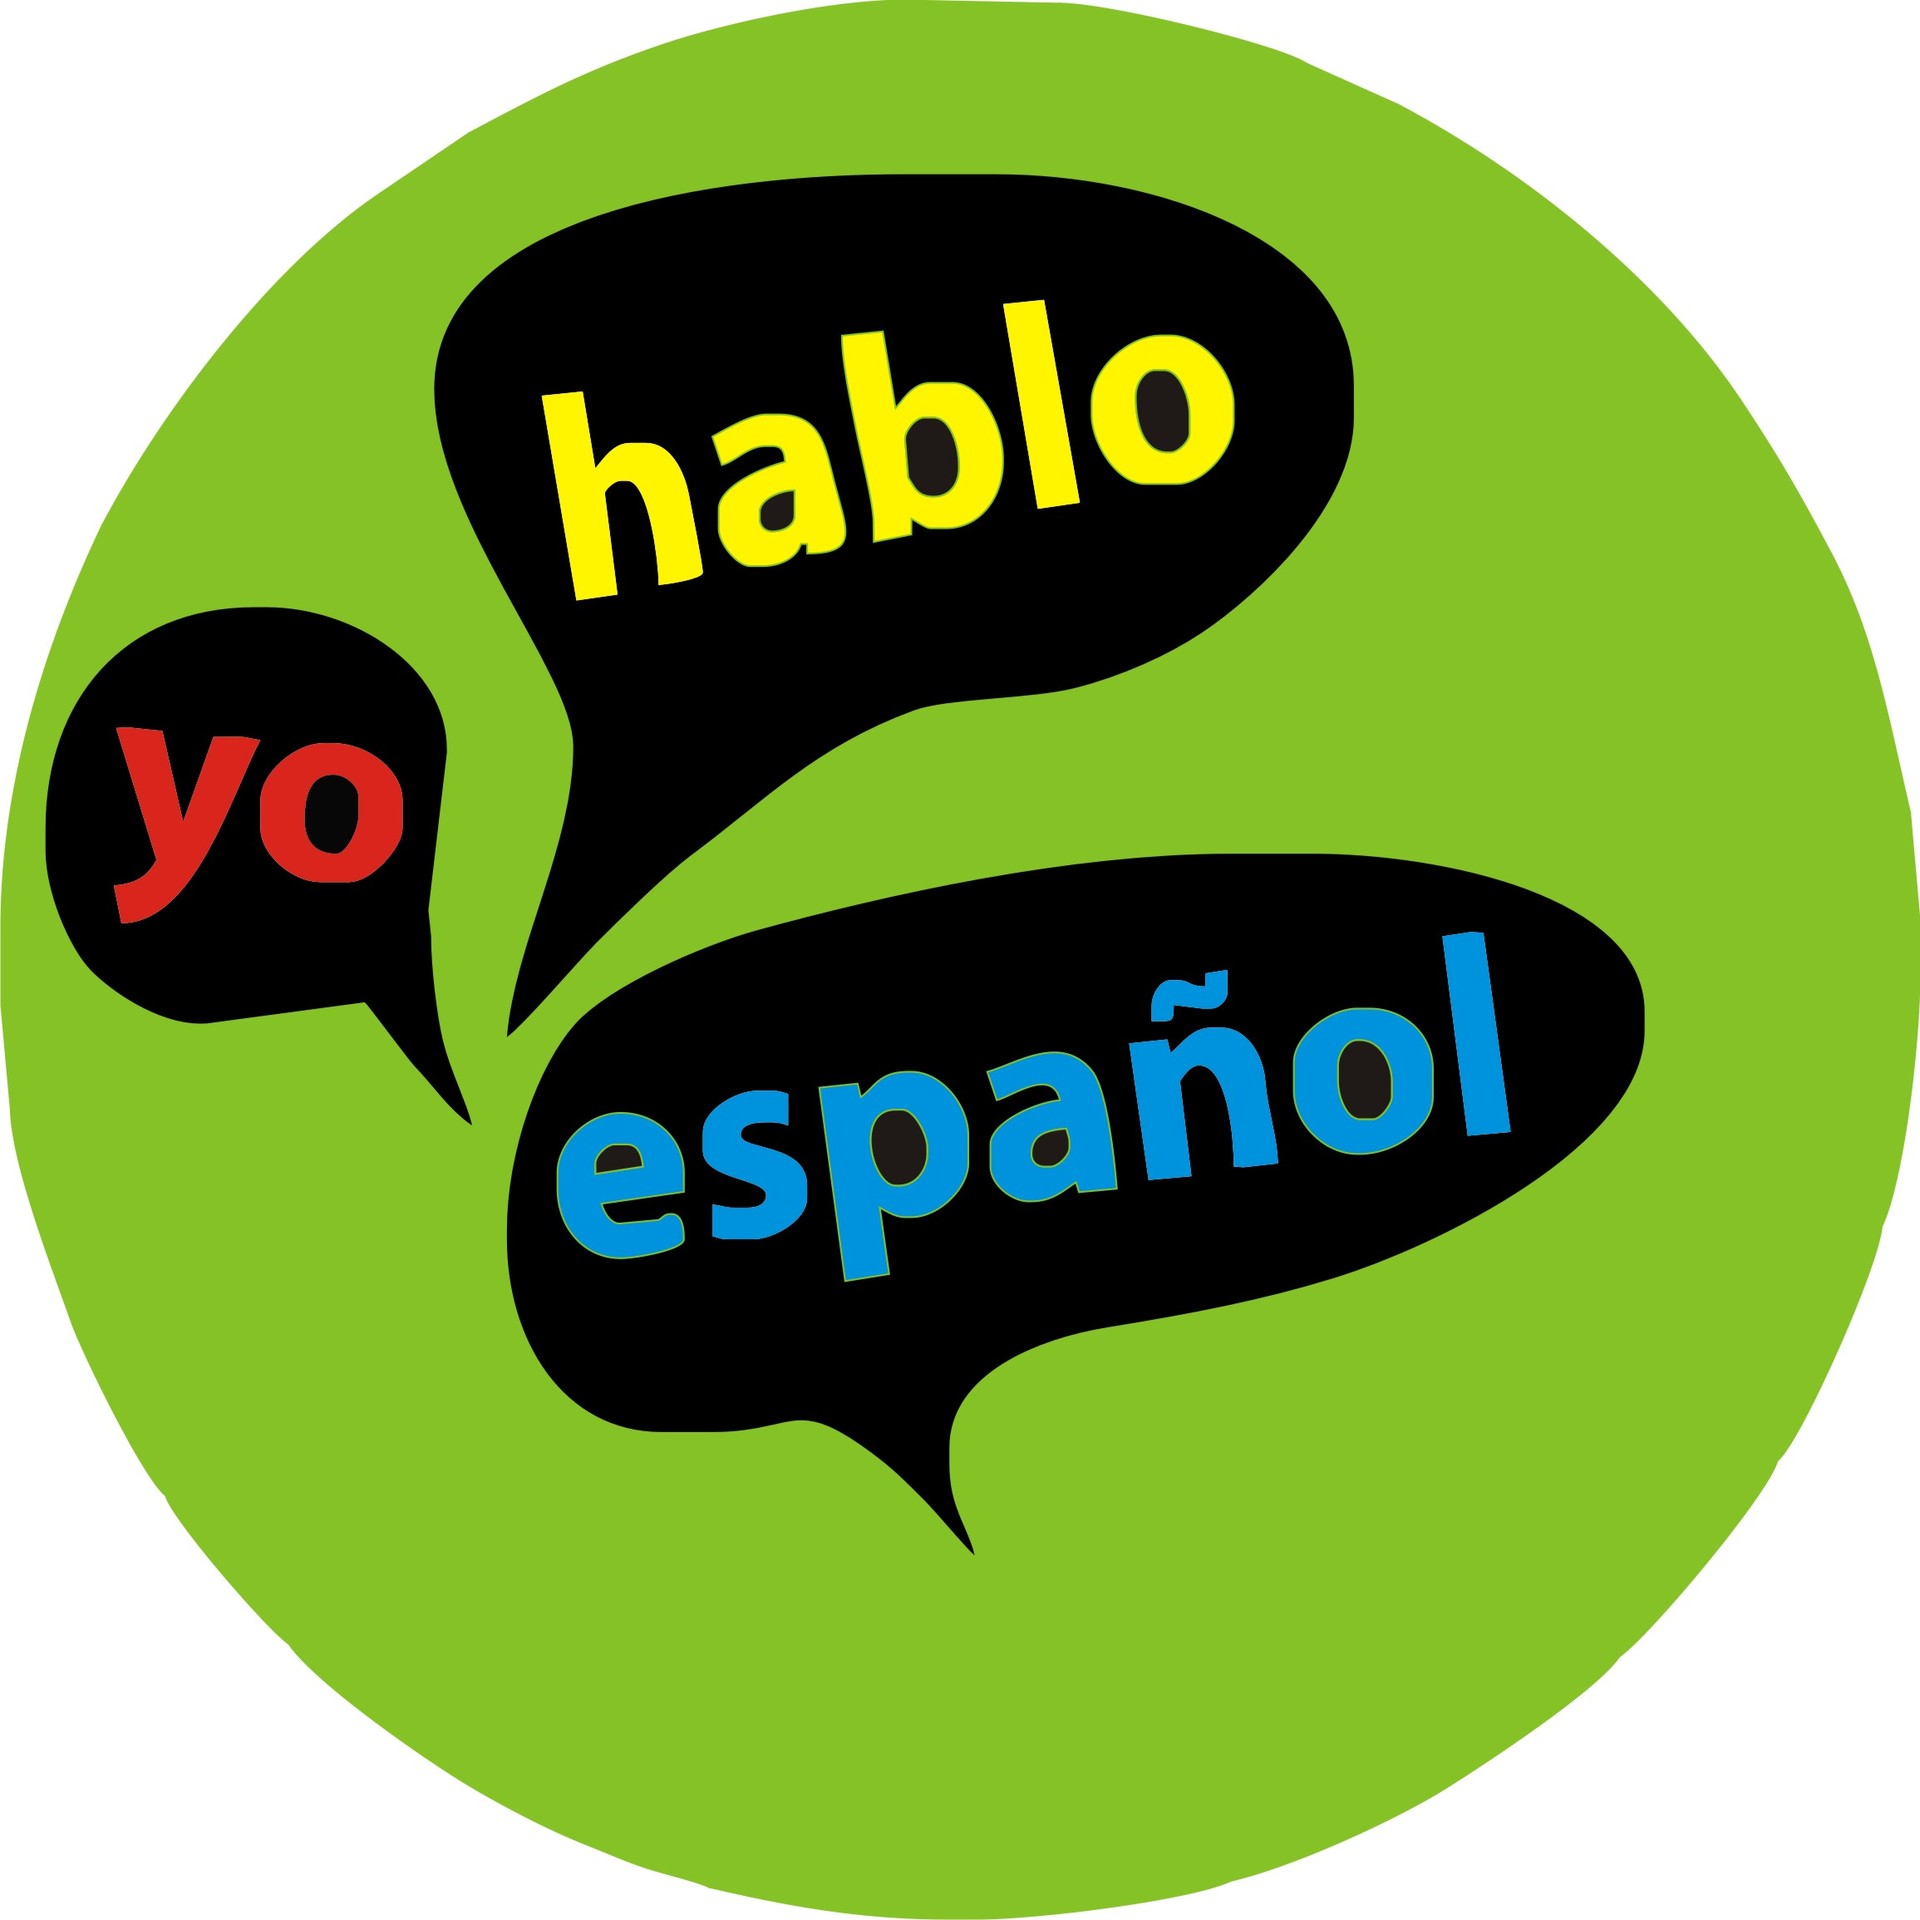 La Mia Esperienza Imparando La Lingua Spagnola Suggerimenti Erasmus